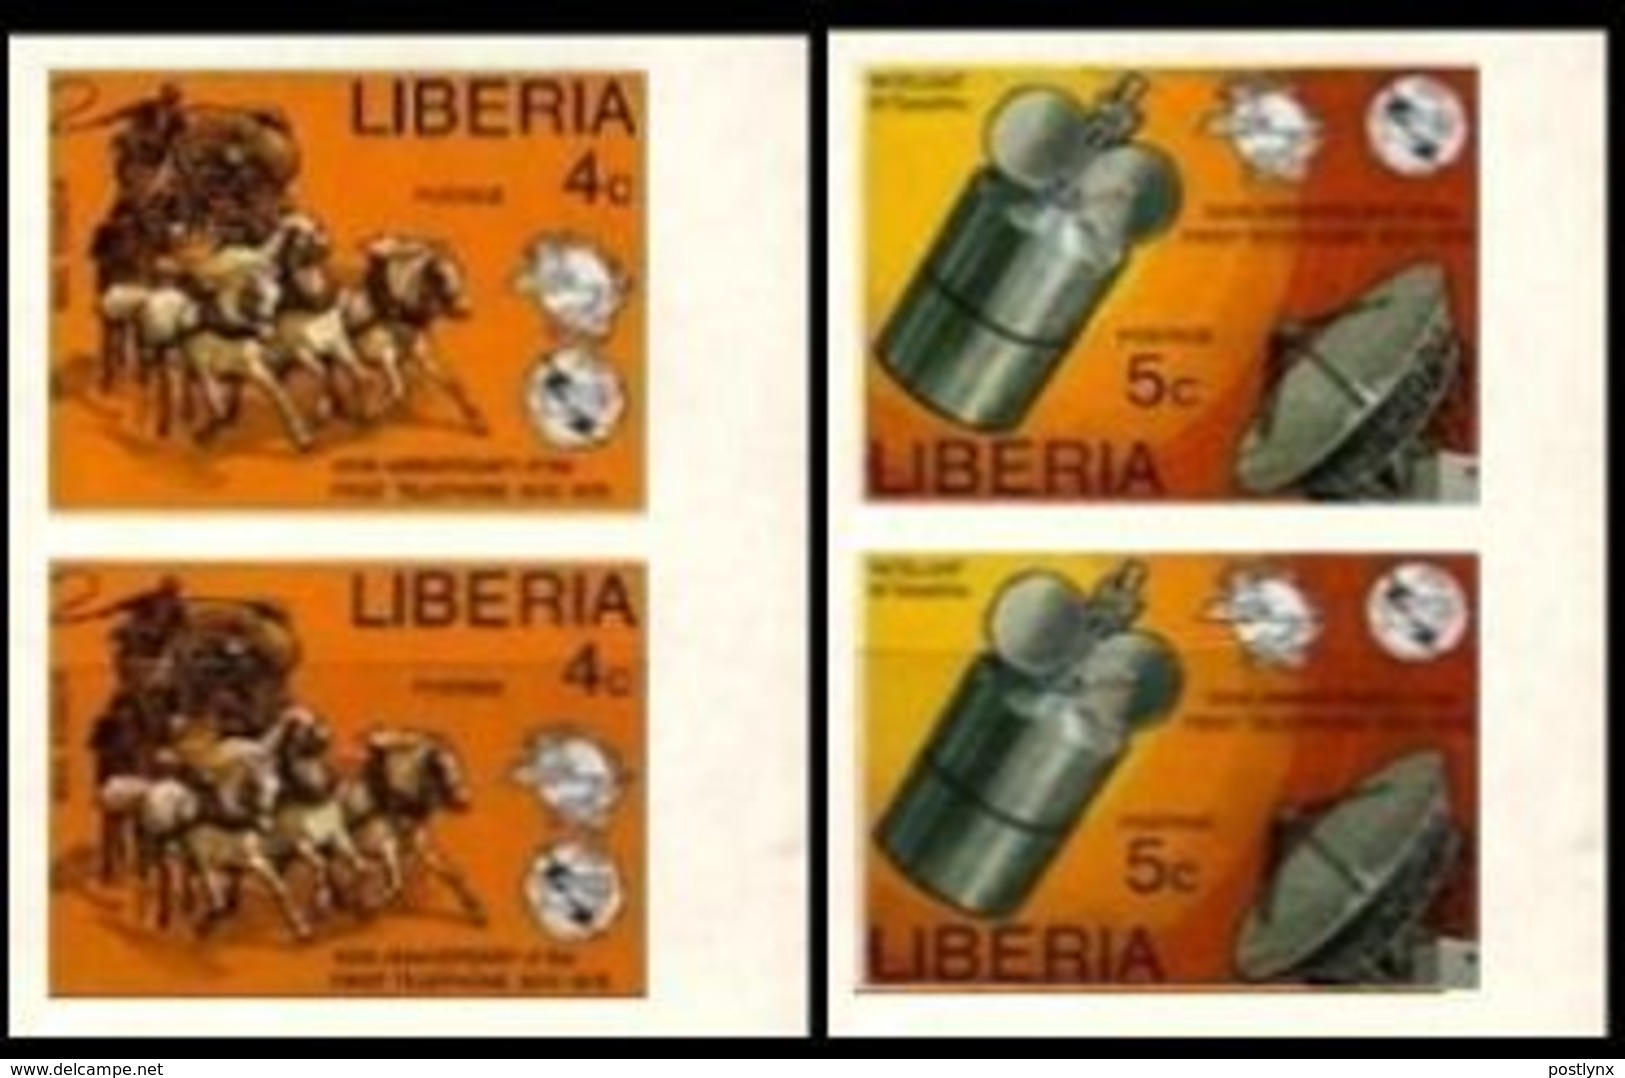 LIBERIA 1976 Telecom UPU ITU Space Intelsat IV Satellite Parabole 4/5c MARG.IMPERF.PAIRS:2 - United States